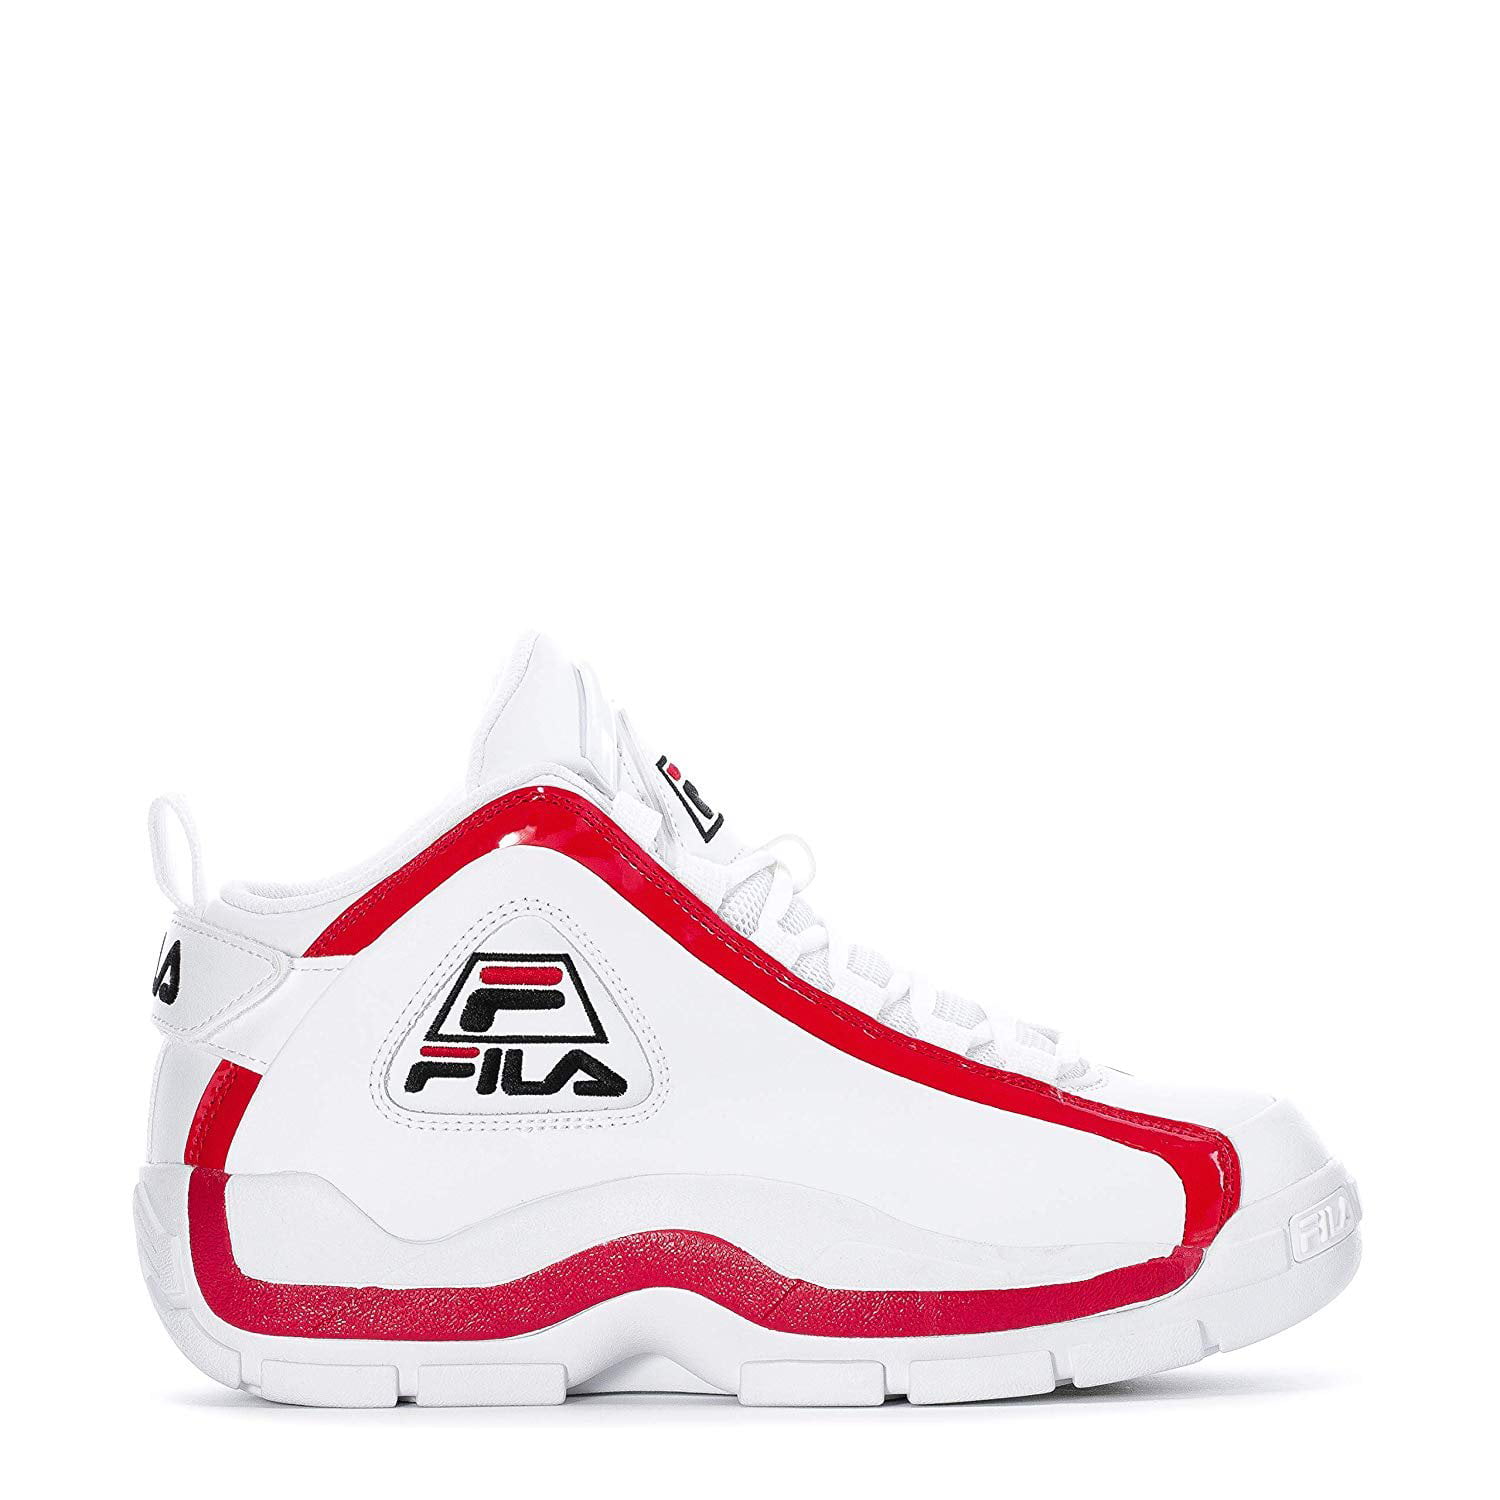 FILA - Fila Men's Grant Hill 2 Basketball Shoes (13, White/Fila Red ...